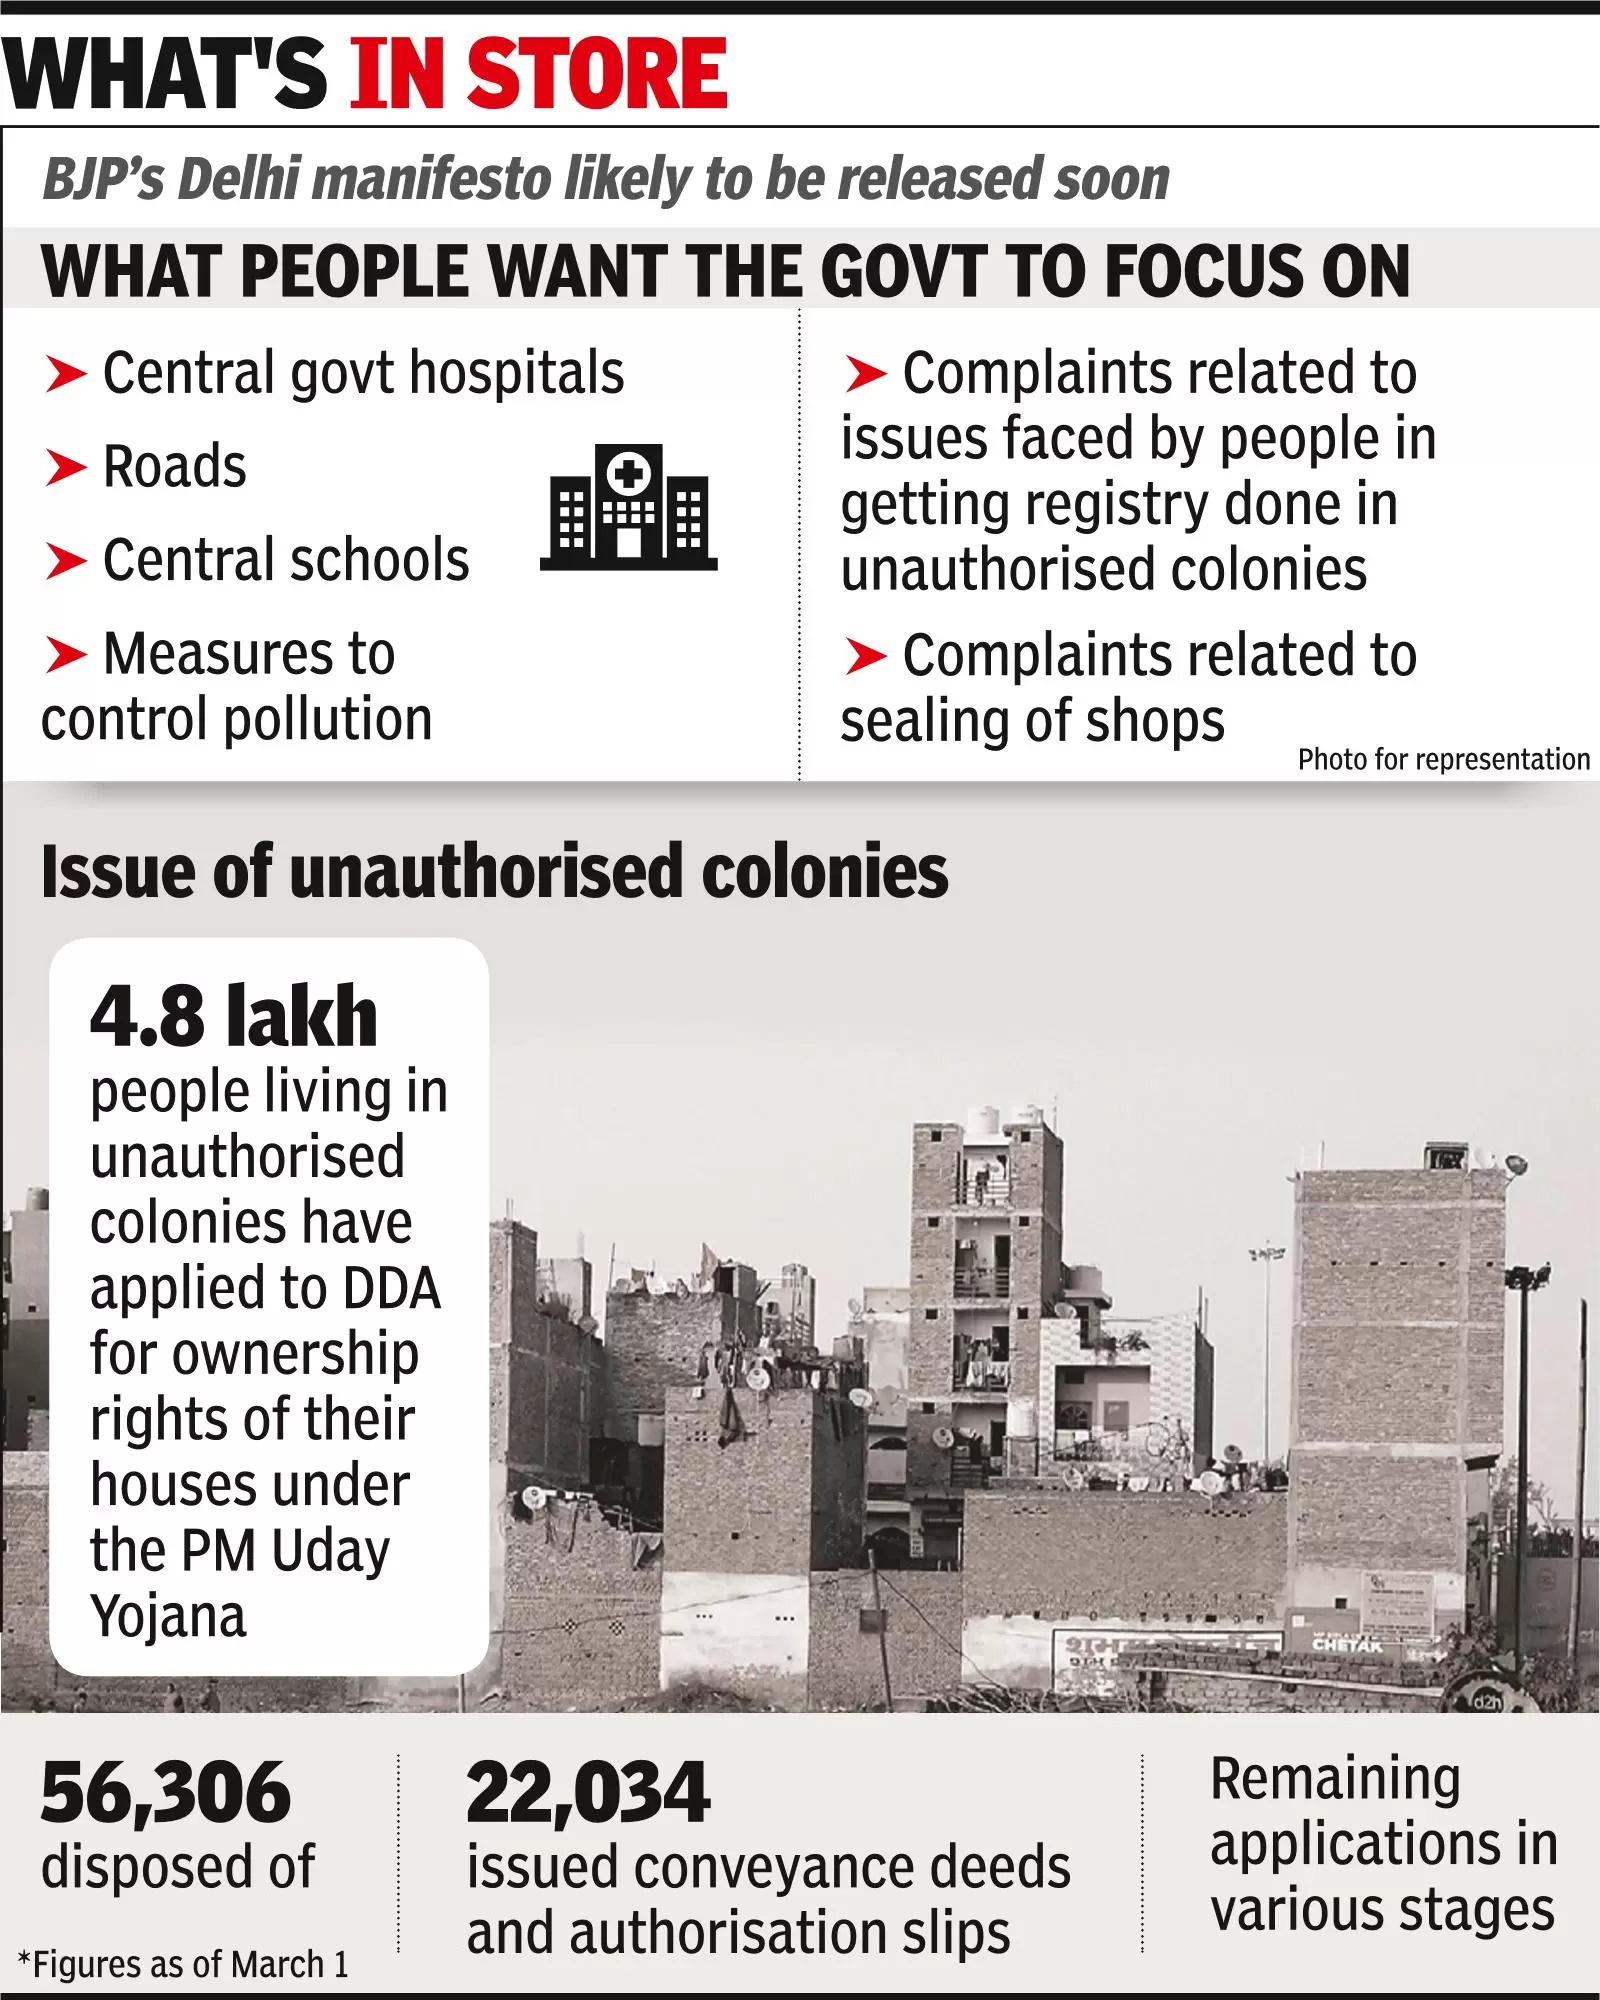 BJP’s Delhi manifesto likely to focus on central hosps, roads